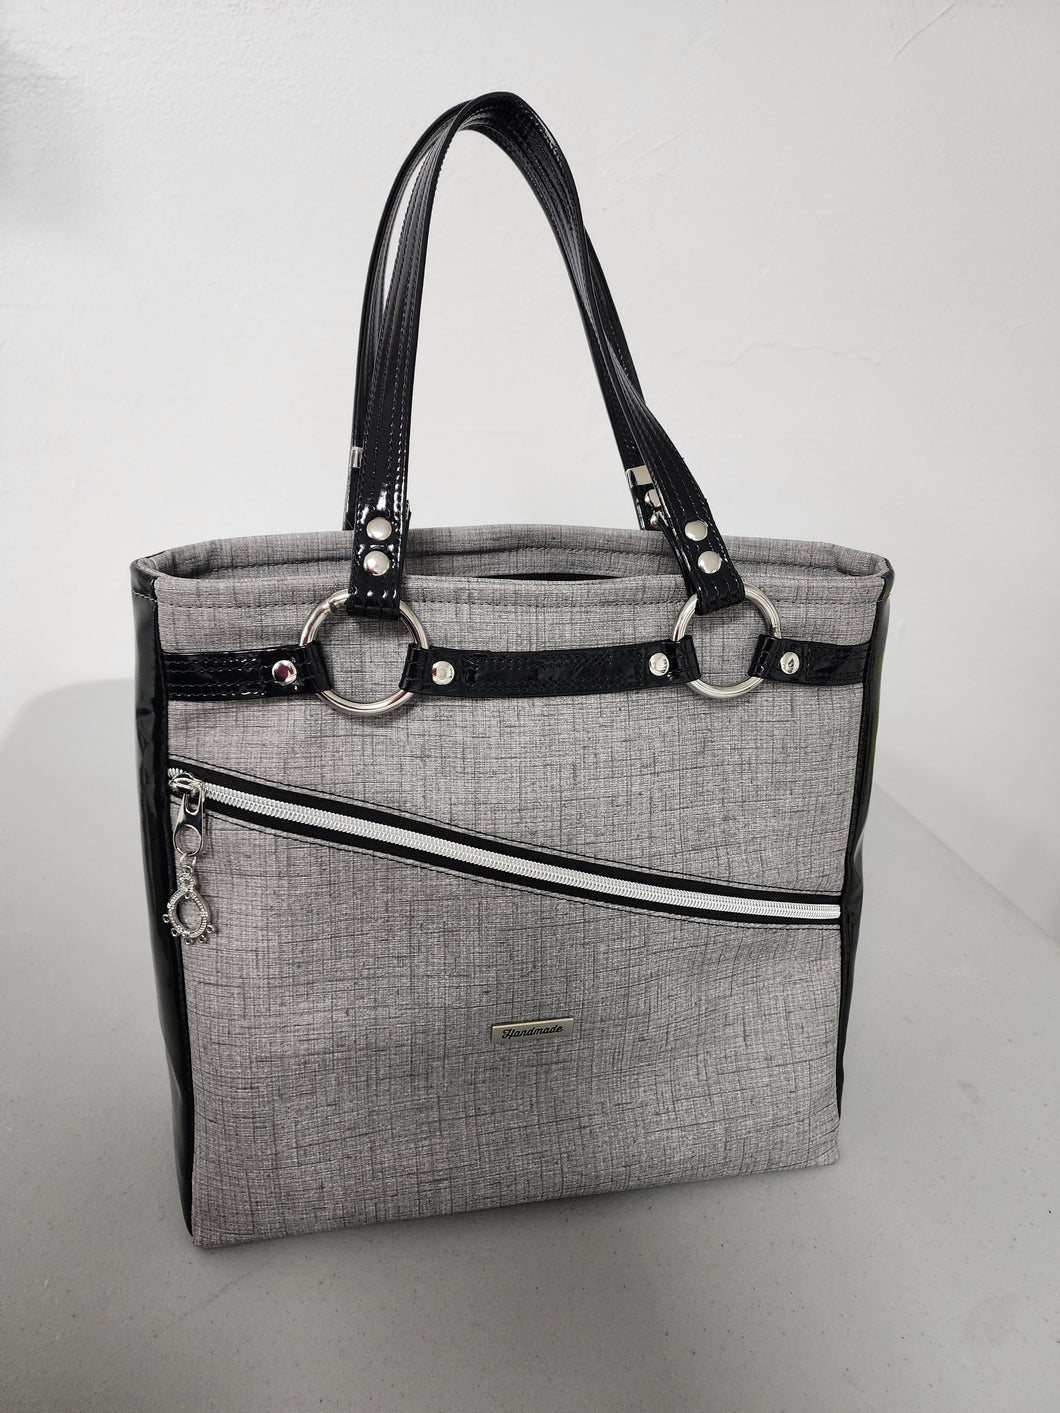 Handbag - Lomexa - grey, black and silver